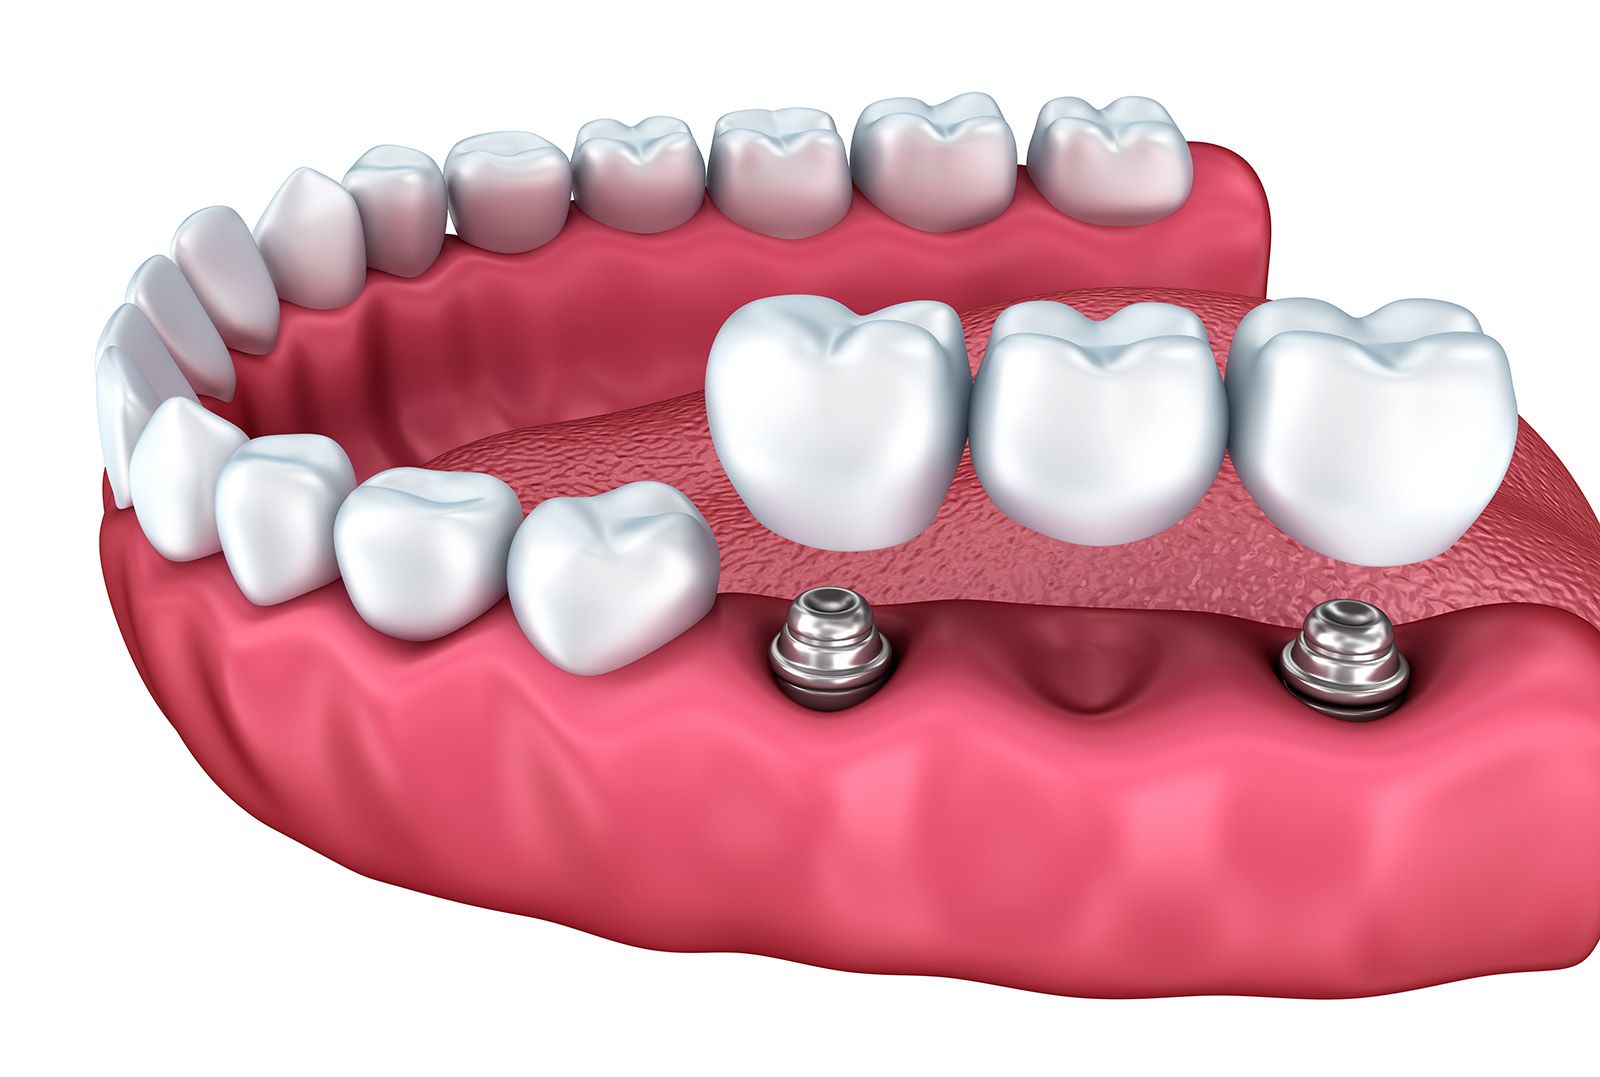 Key Differences Between Composit Bonding and Dental Bridges